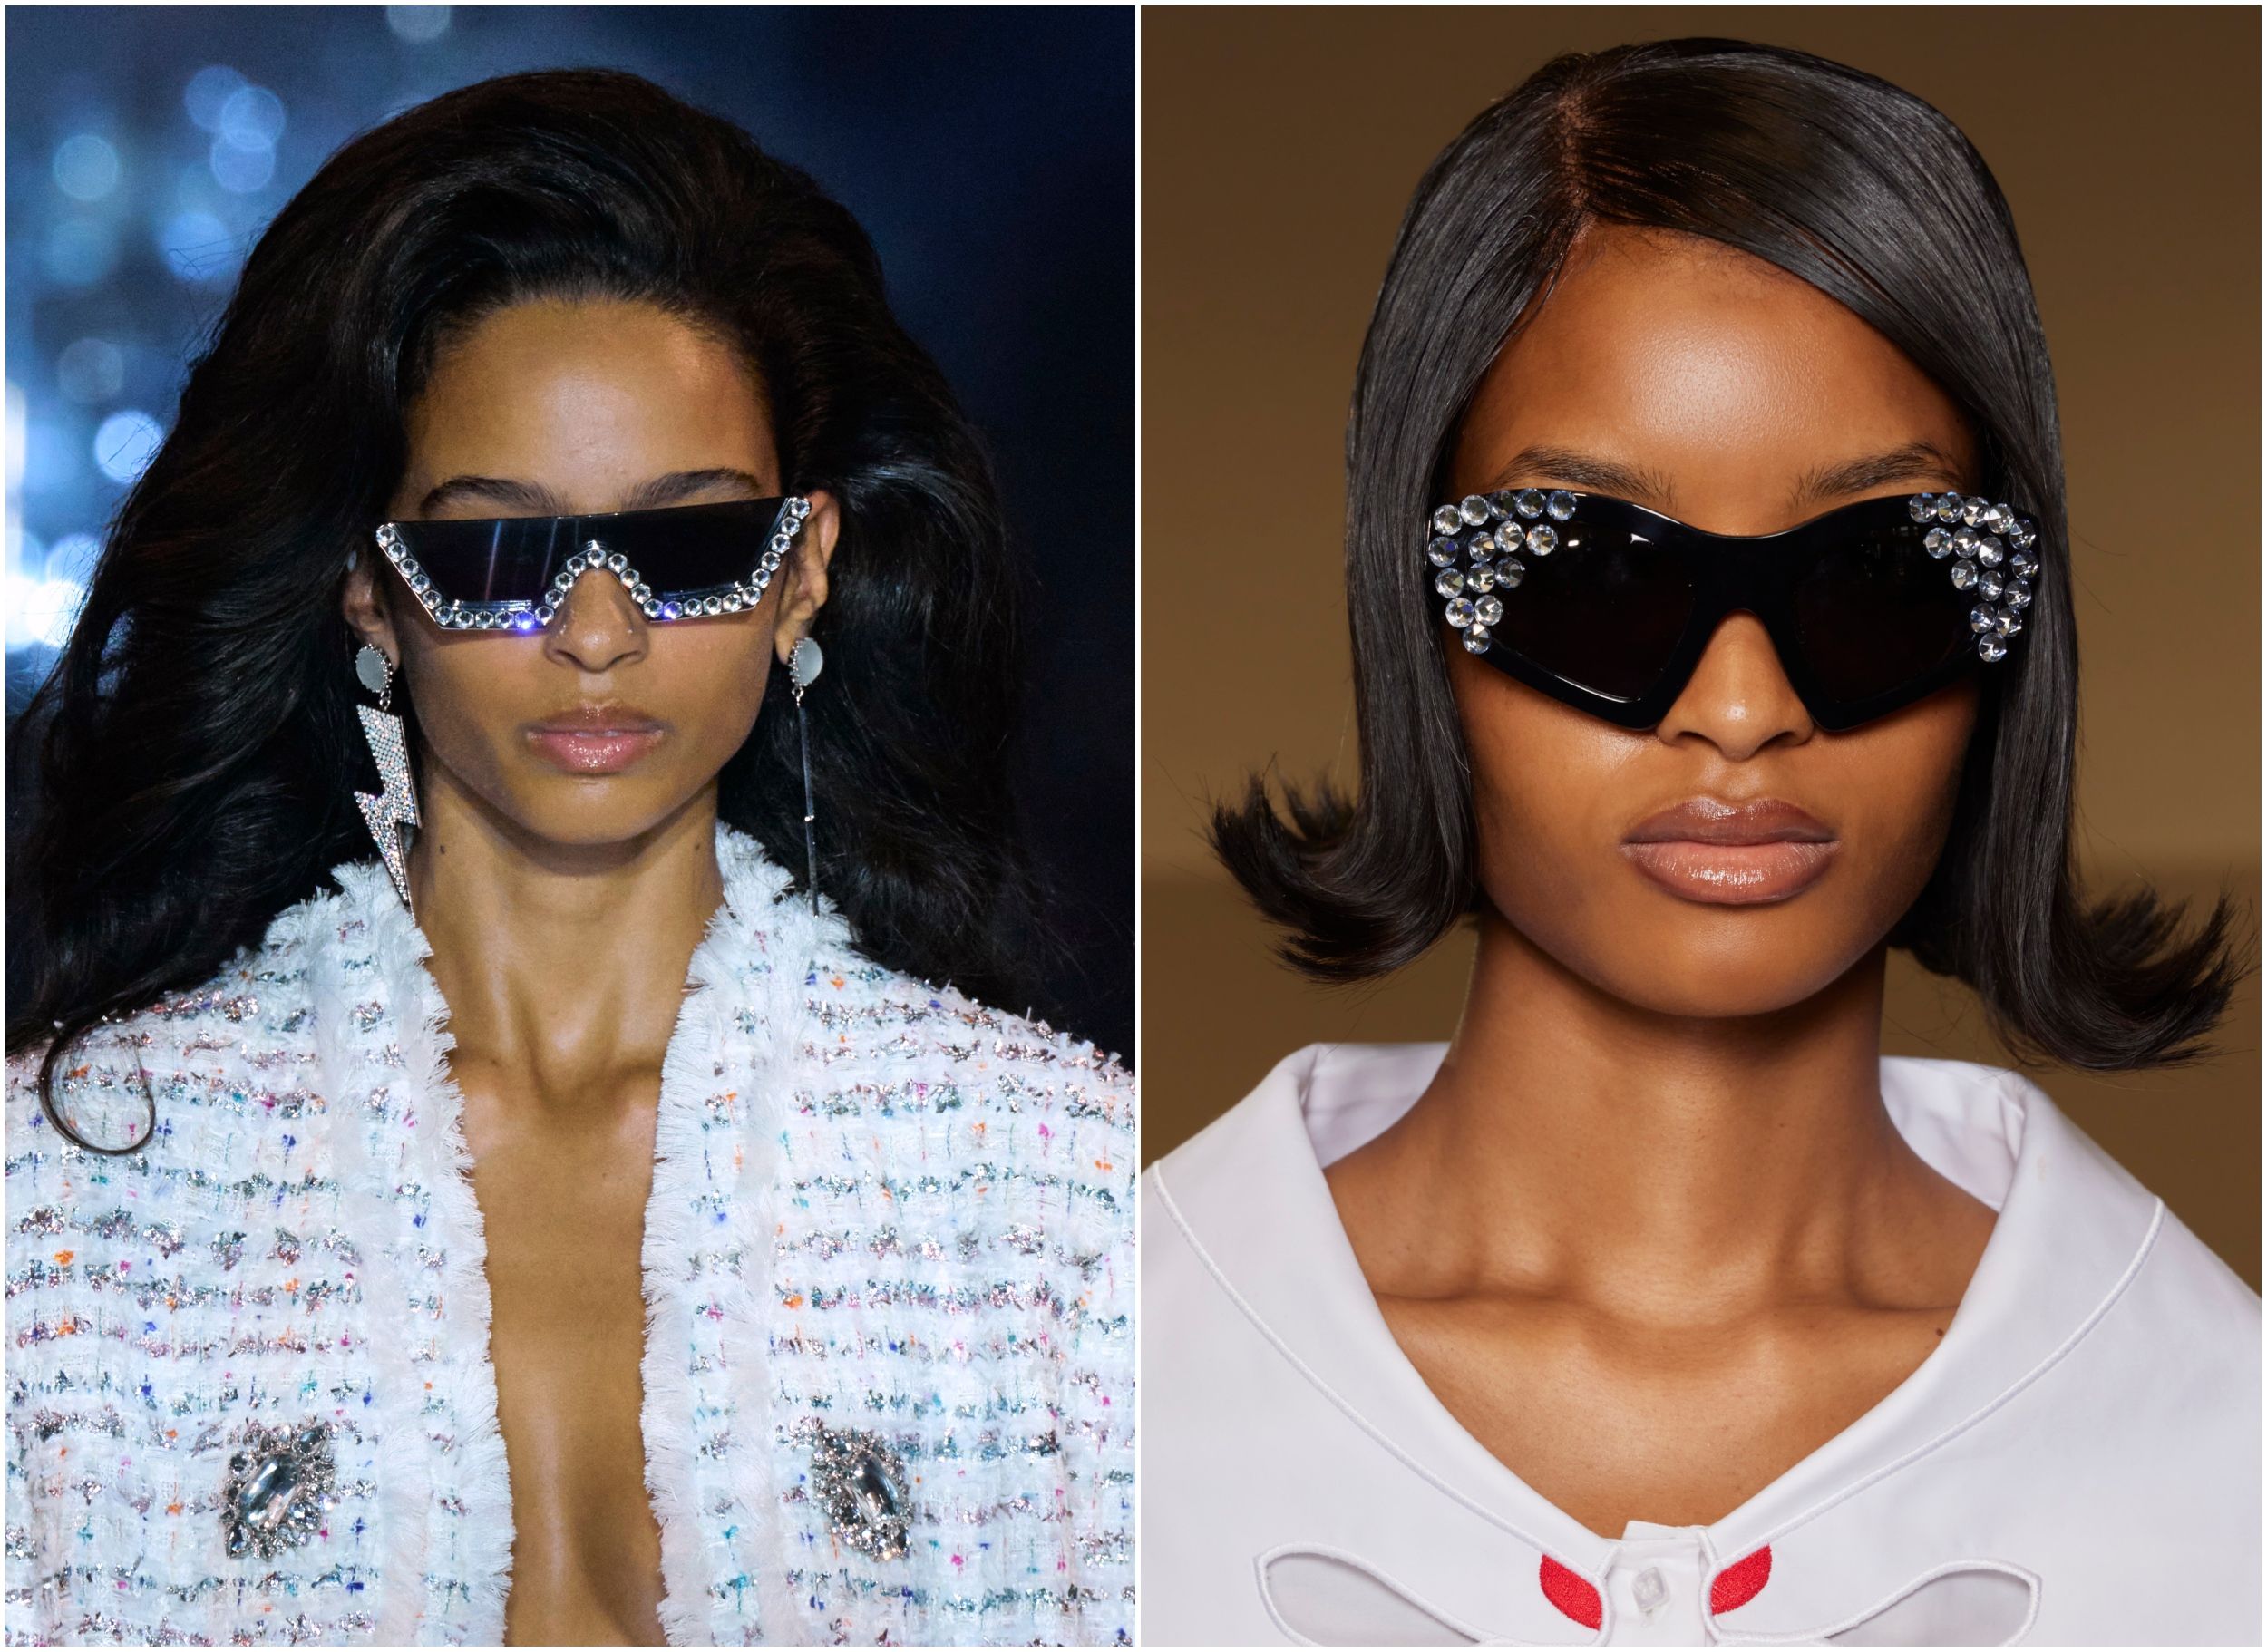 Gafas de sol para hombre de Louis Vuitton: dos siluetas atemporales